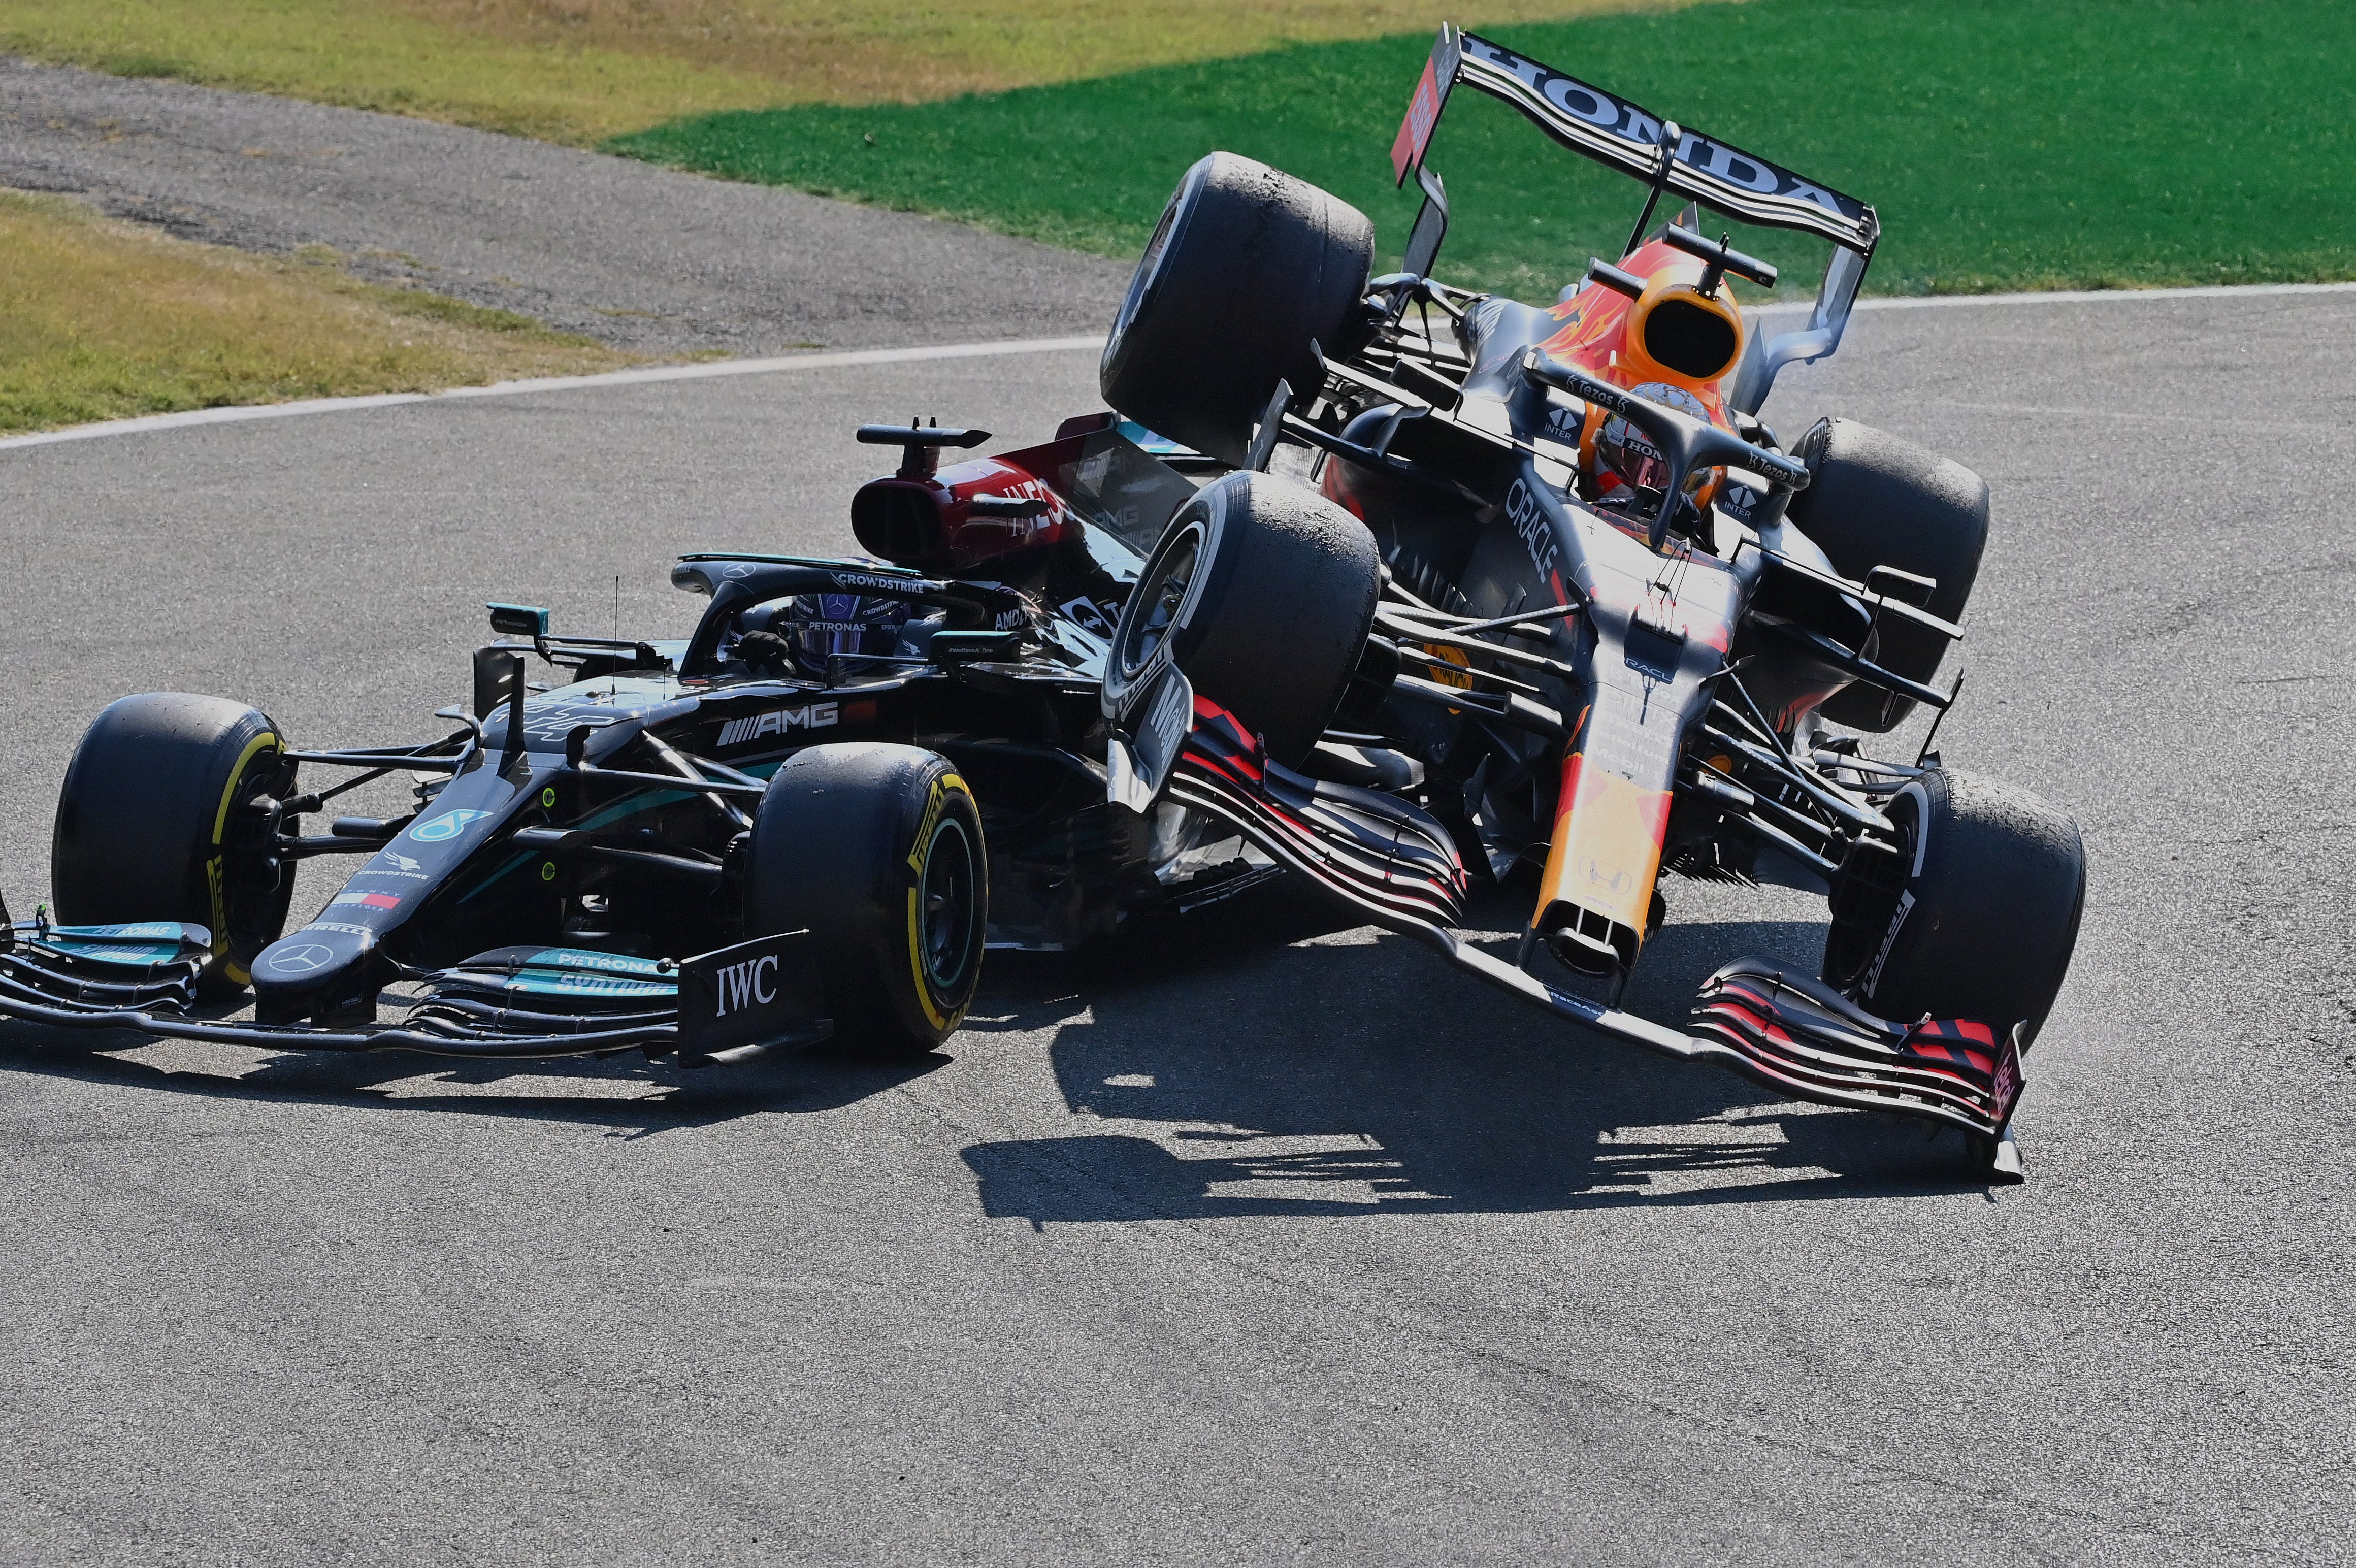 Verstappen’s car went on top of rival Hamilton